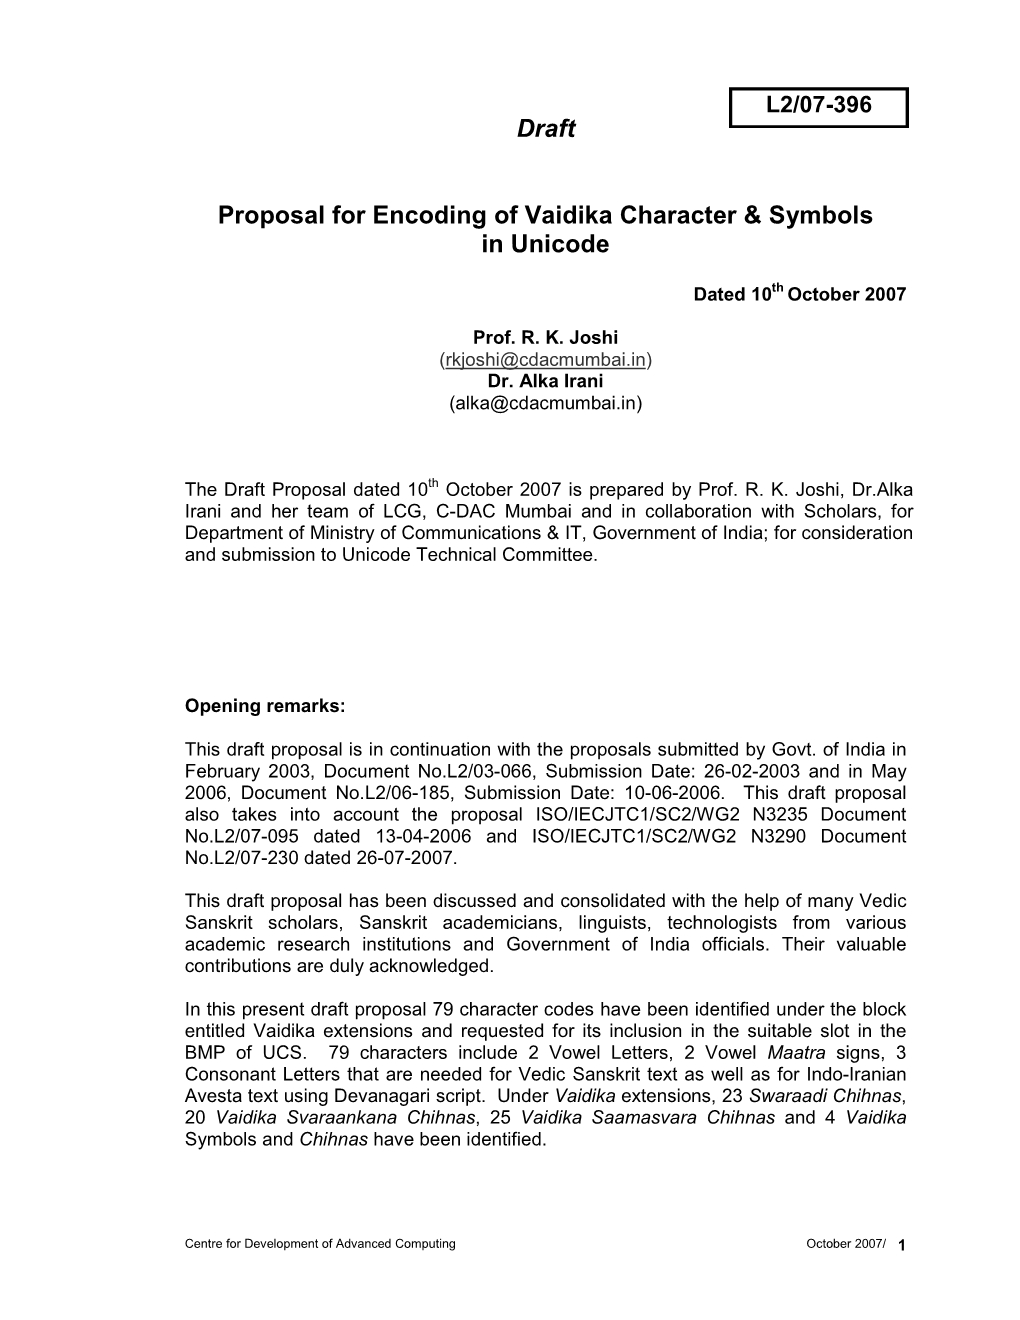 Draft Proposal for Encoding of Vaidika Character & Symbols in Unicode